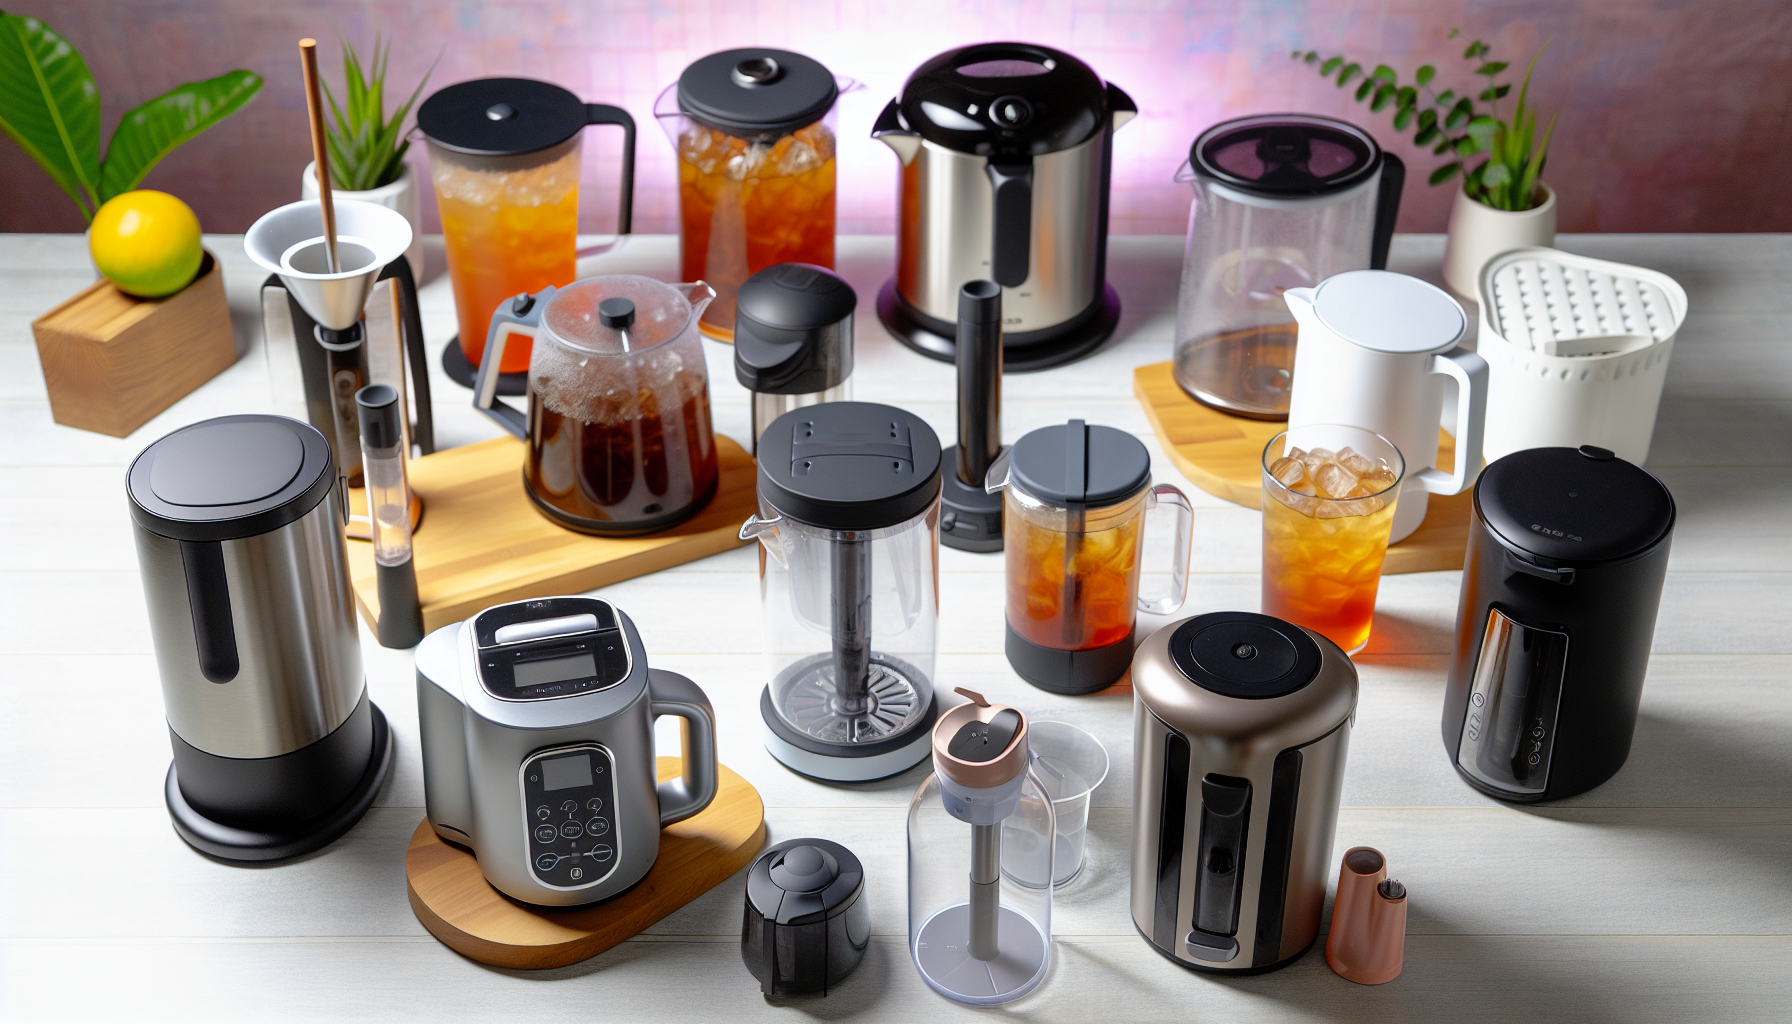 Choosing the ideal iced tea maker